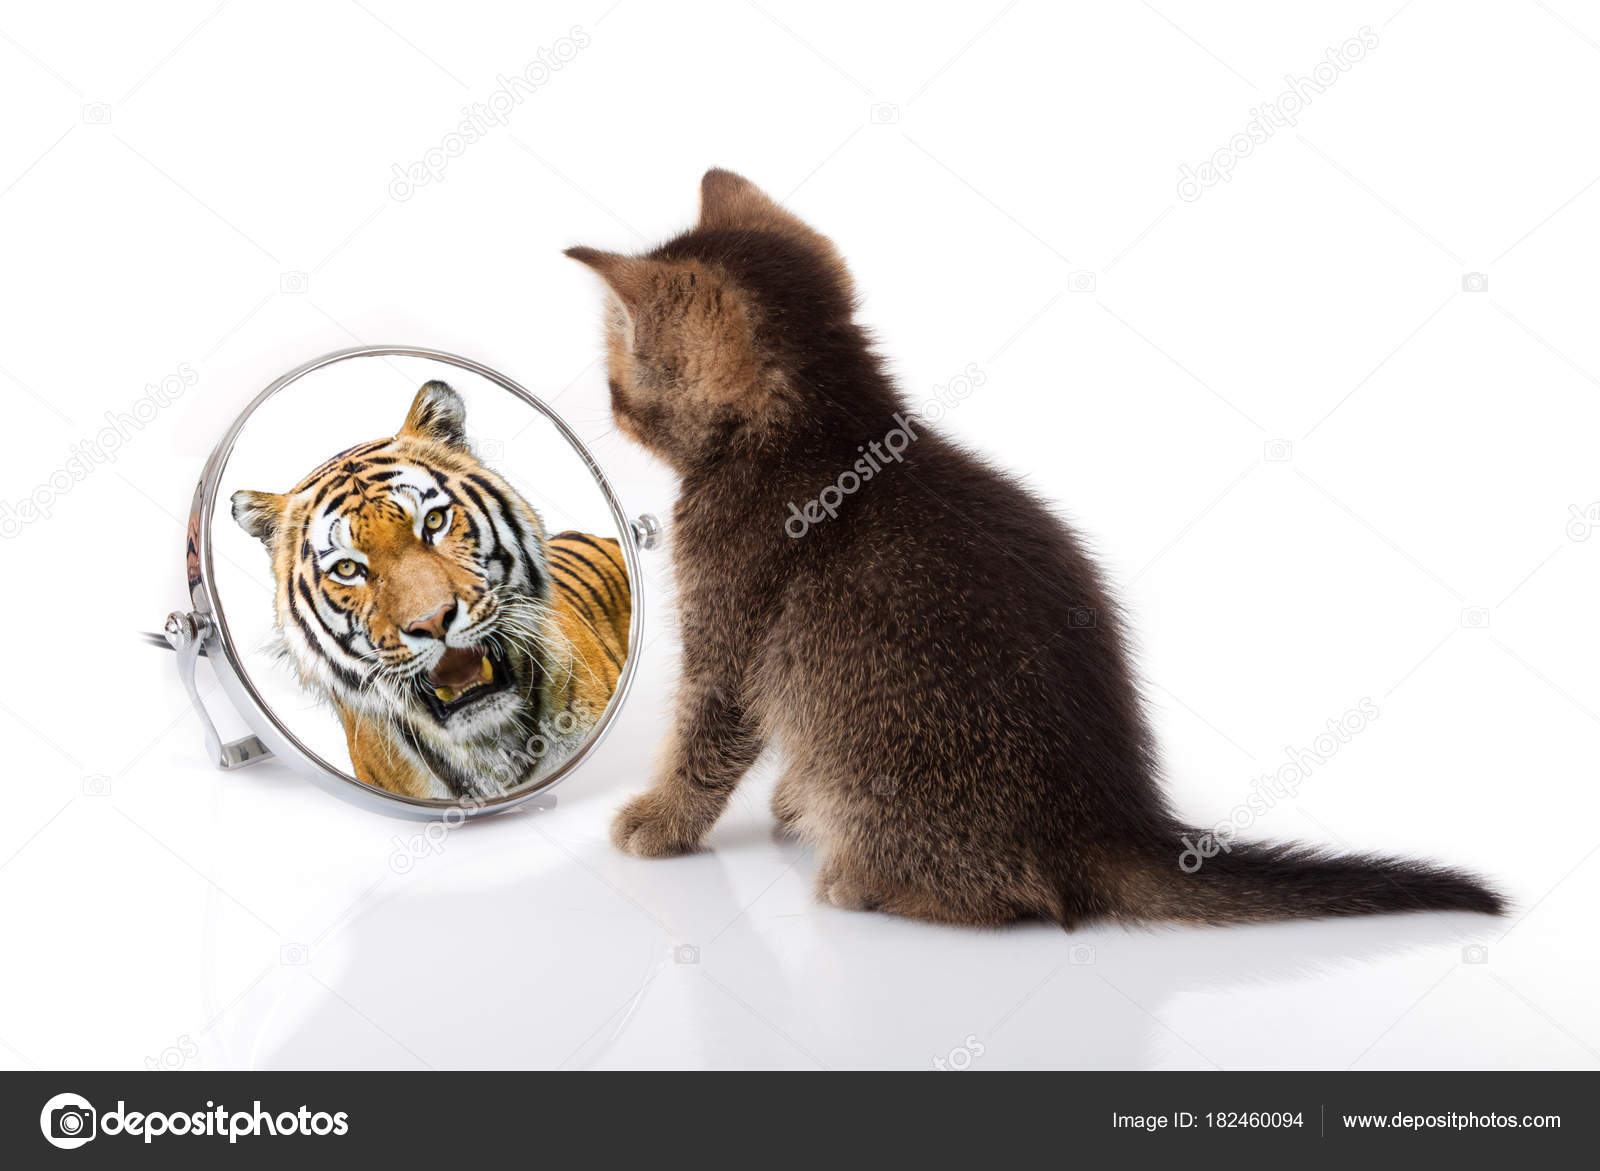 depositphotos_182460094-stock-photo-kitten-with-mirror-on-white.jpg